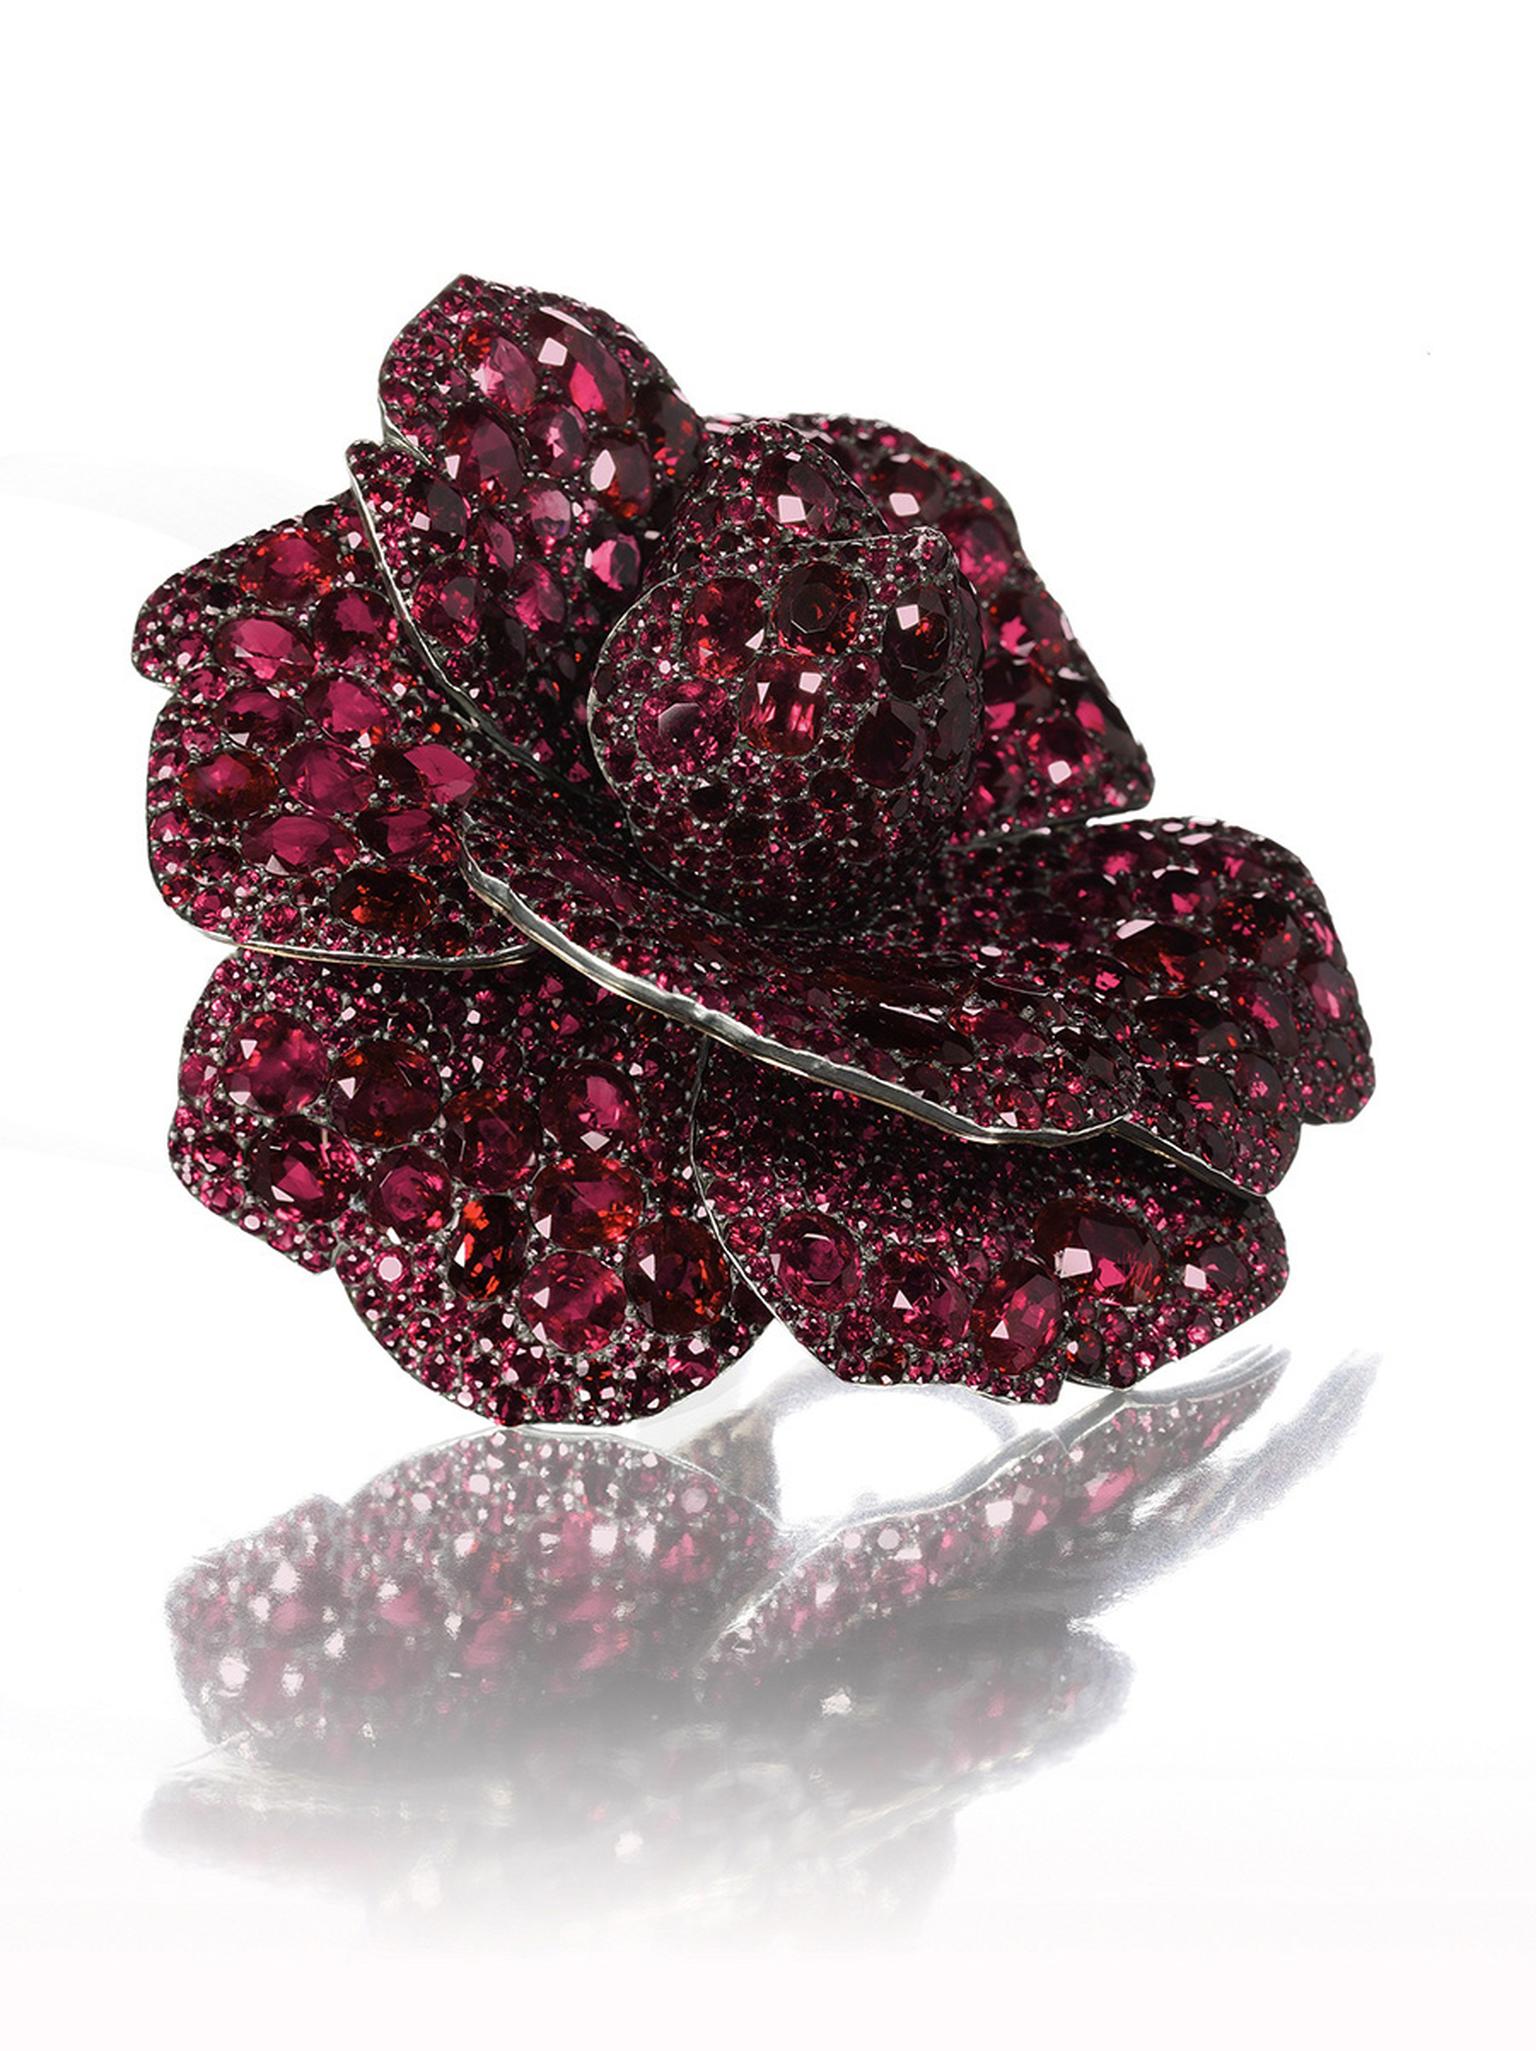 A-ruby-and-diamond-Camellia-flower-brooch,-by-JAR-2003.jpg